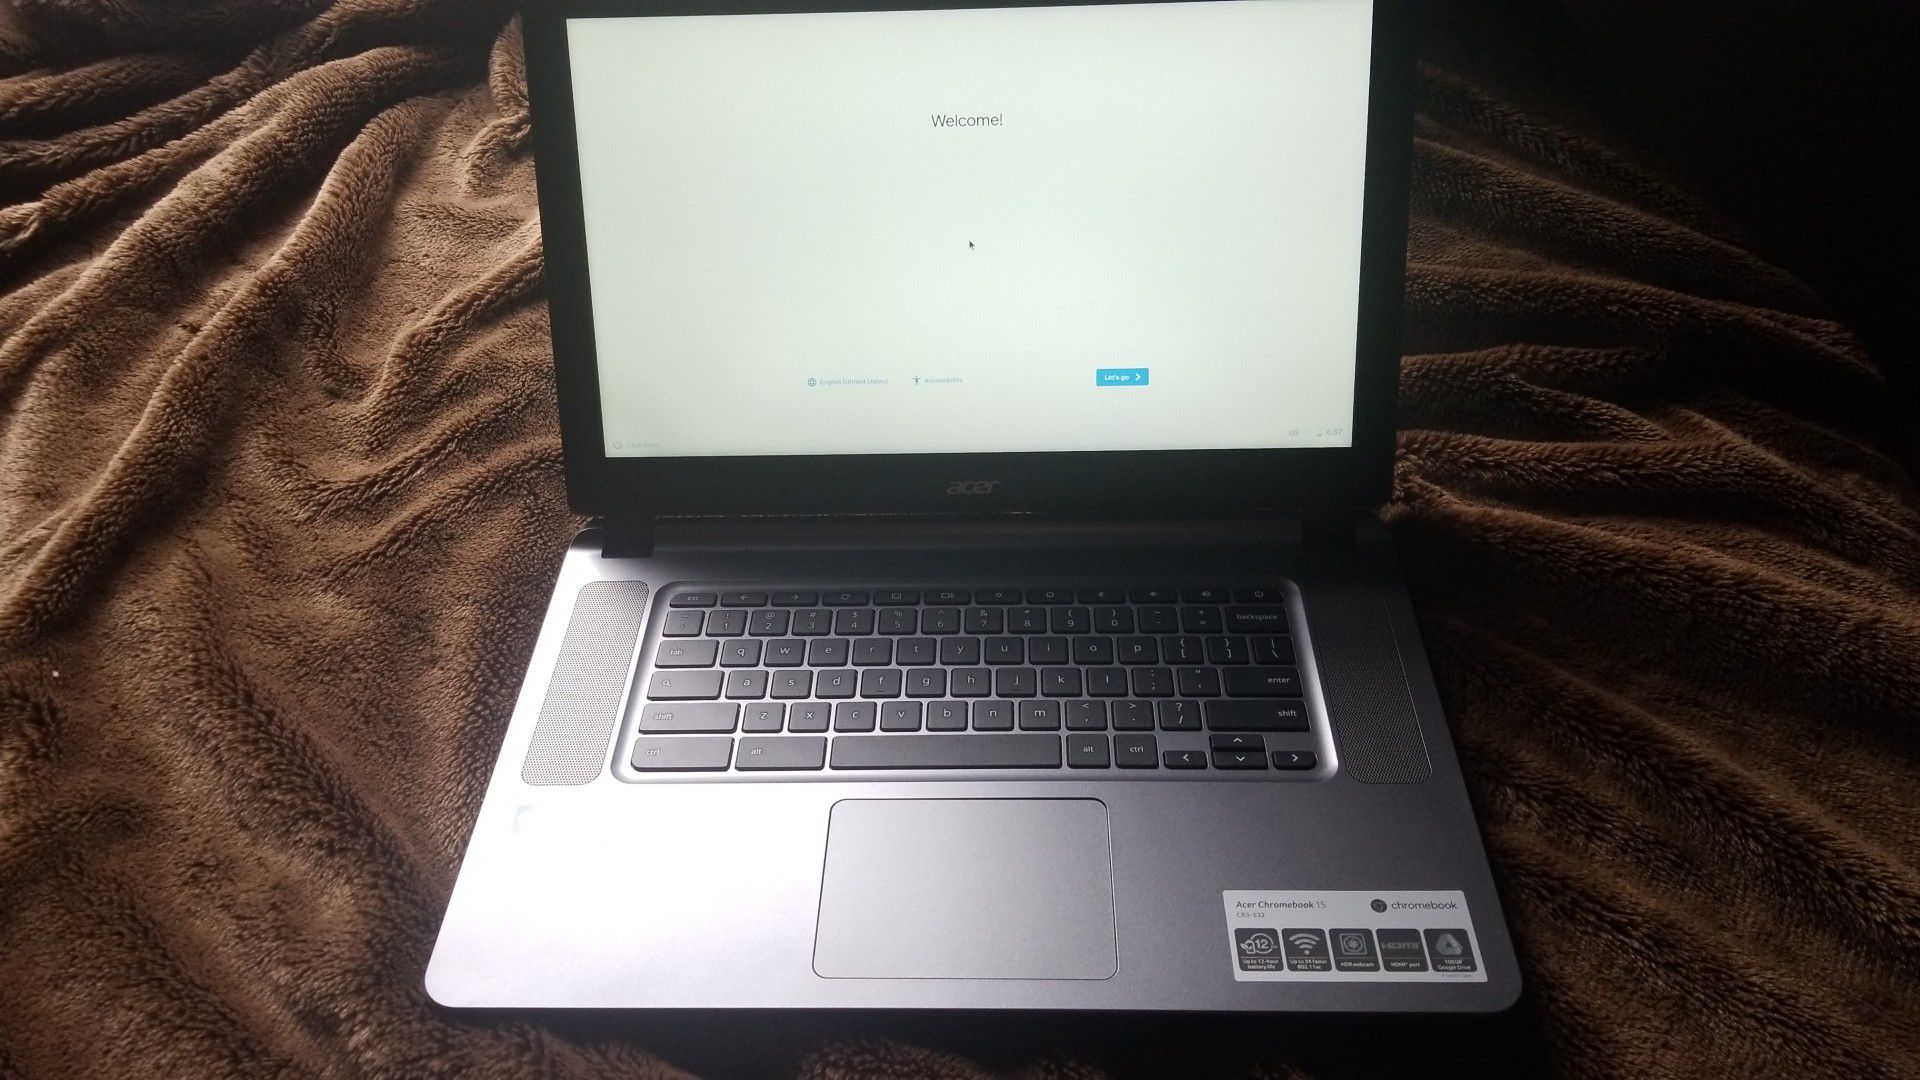 Acer chromebook 15